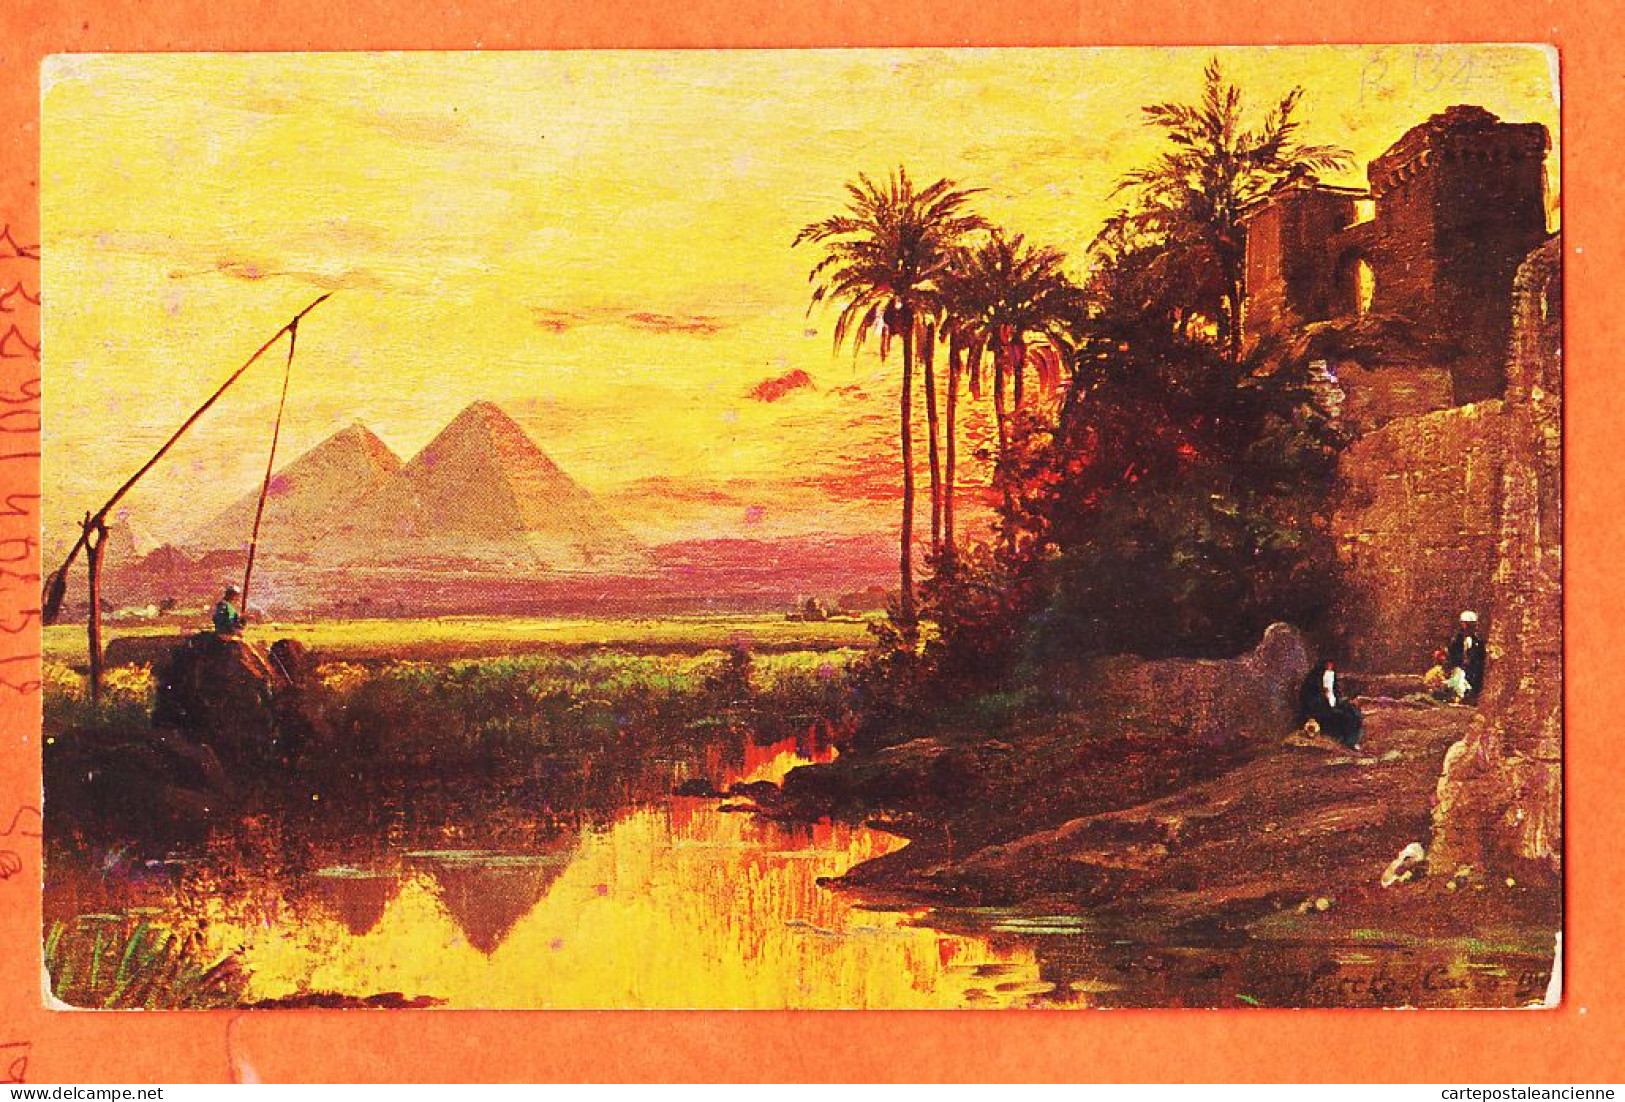 09956 / ⭐ (•◡•) Ägypten ◉ GIZEH Pyramides ◉ Egypte Piramids Pyramides 1905s ◉ ROMMLER JONAS Dresden R-134 Egypt - Gizeh